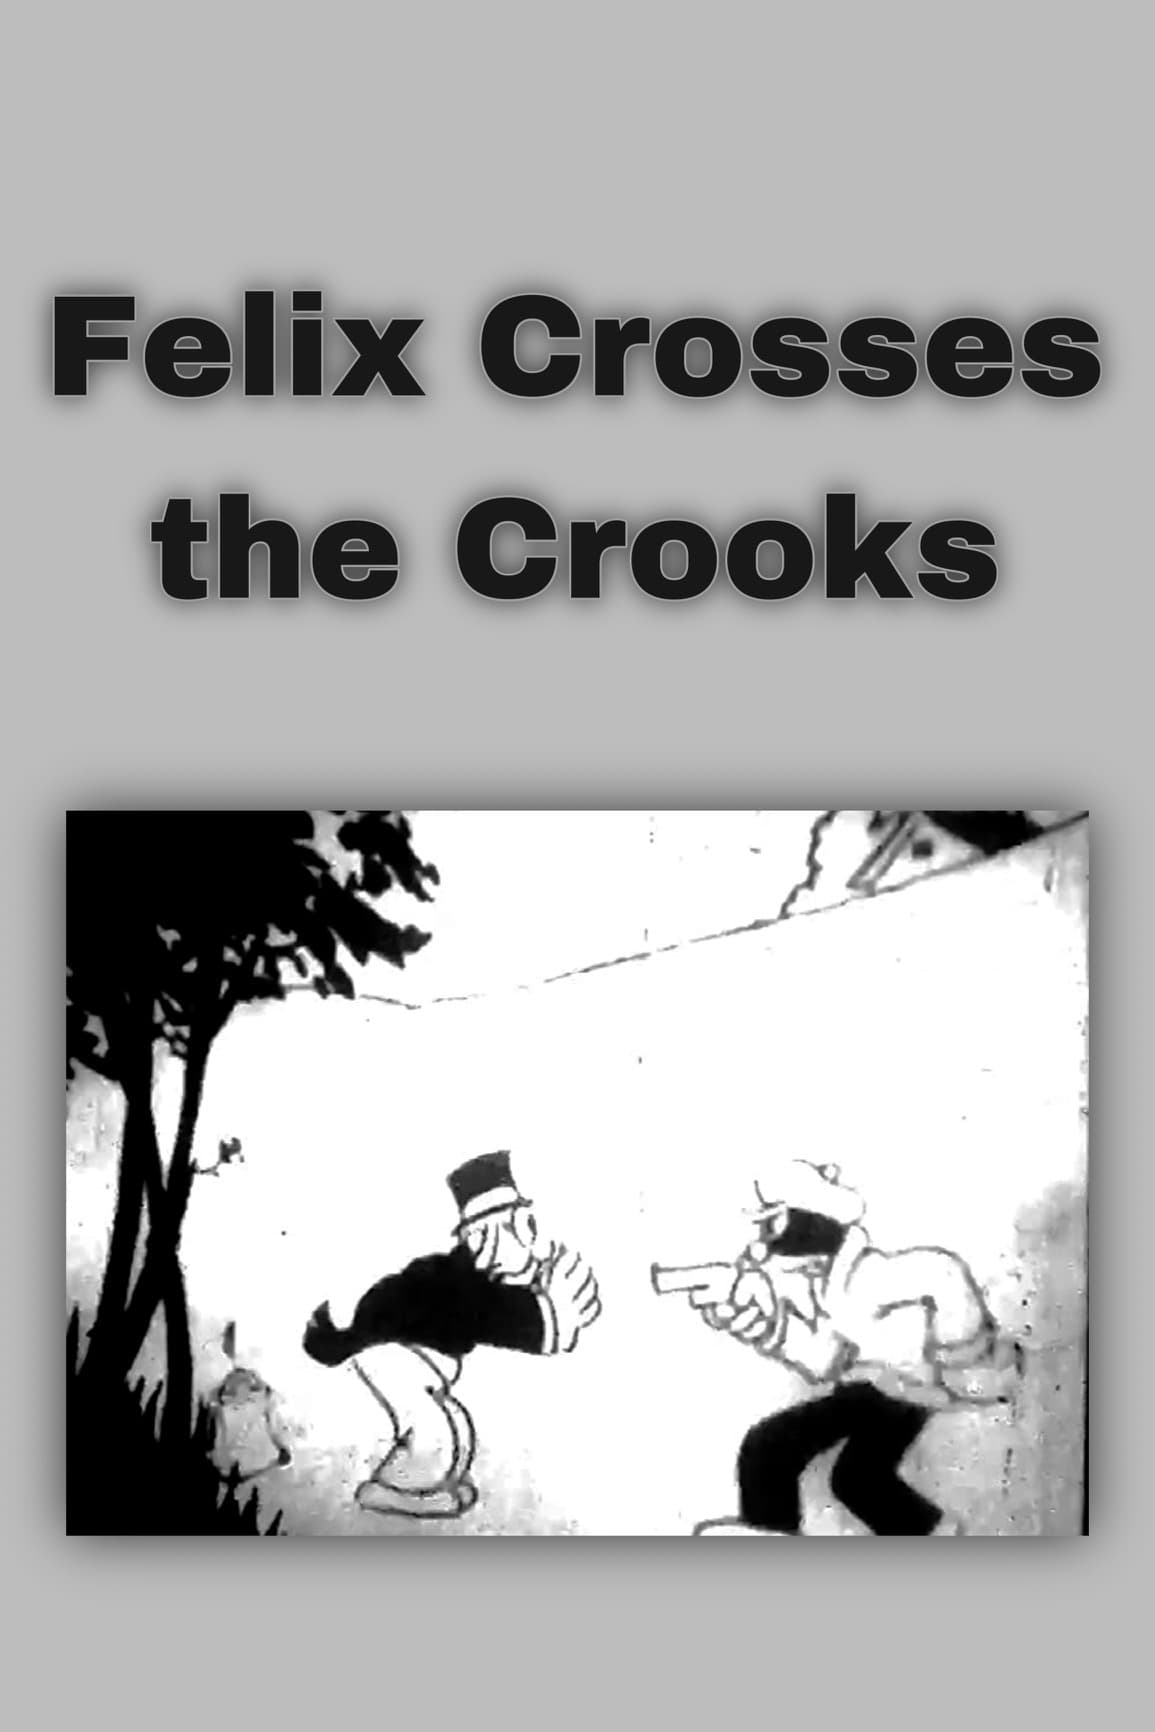 Felix Crosses the Crooks